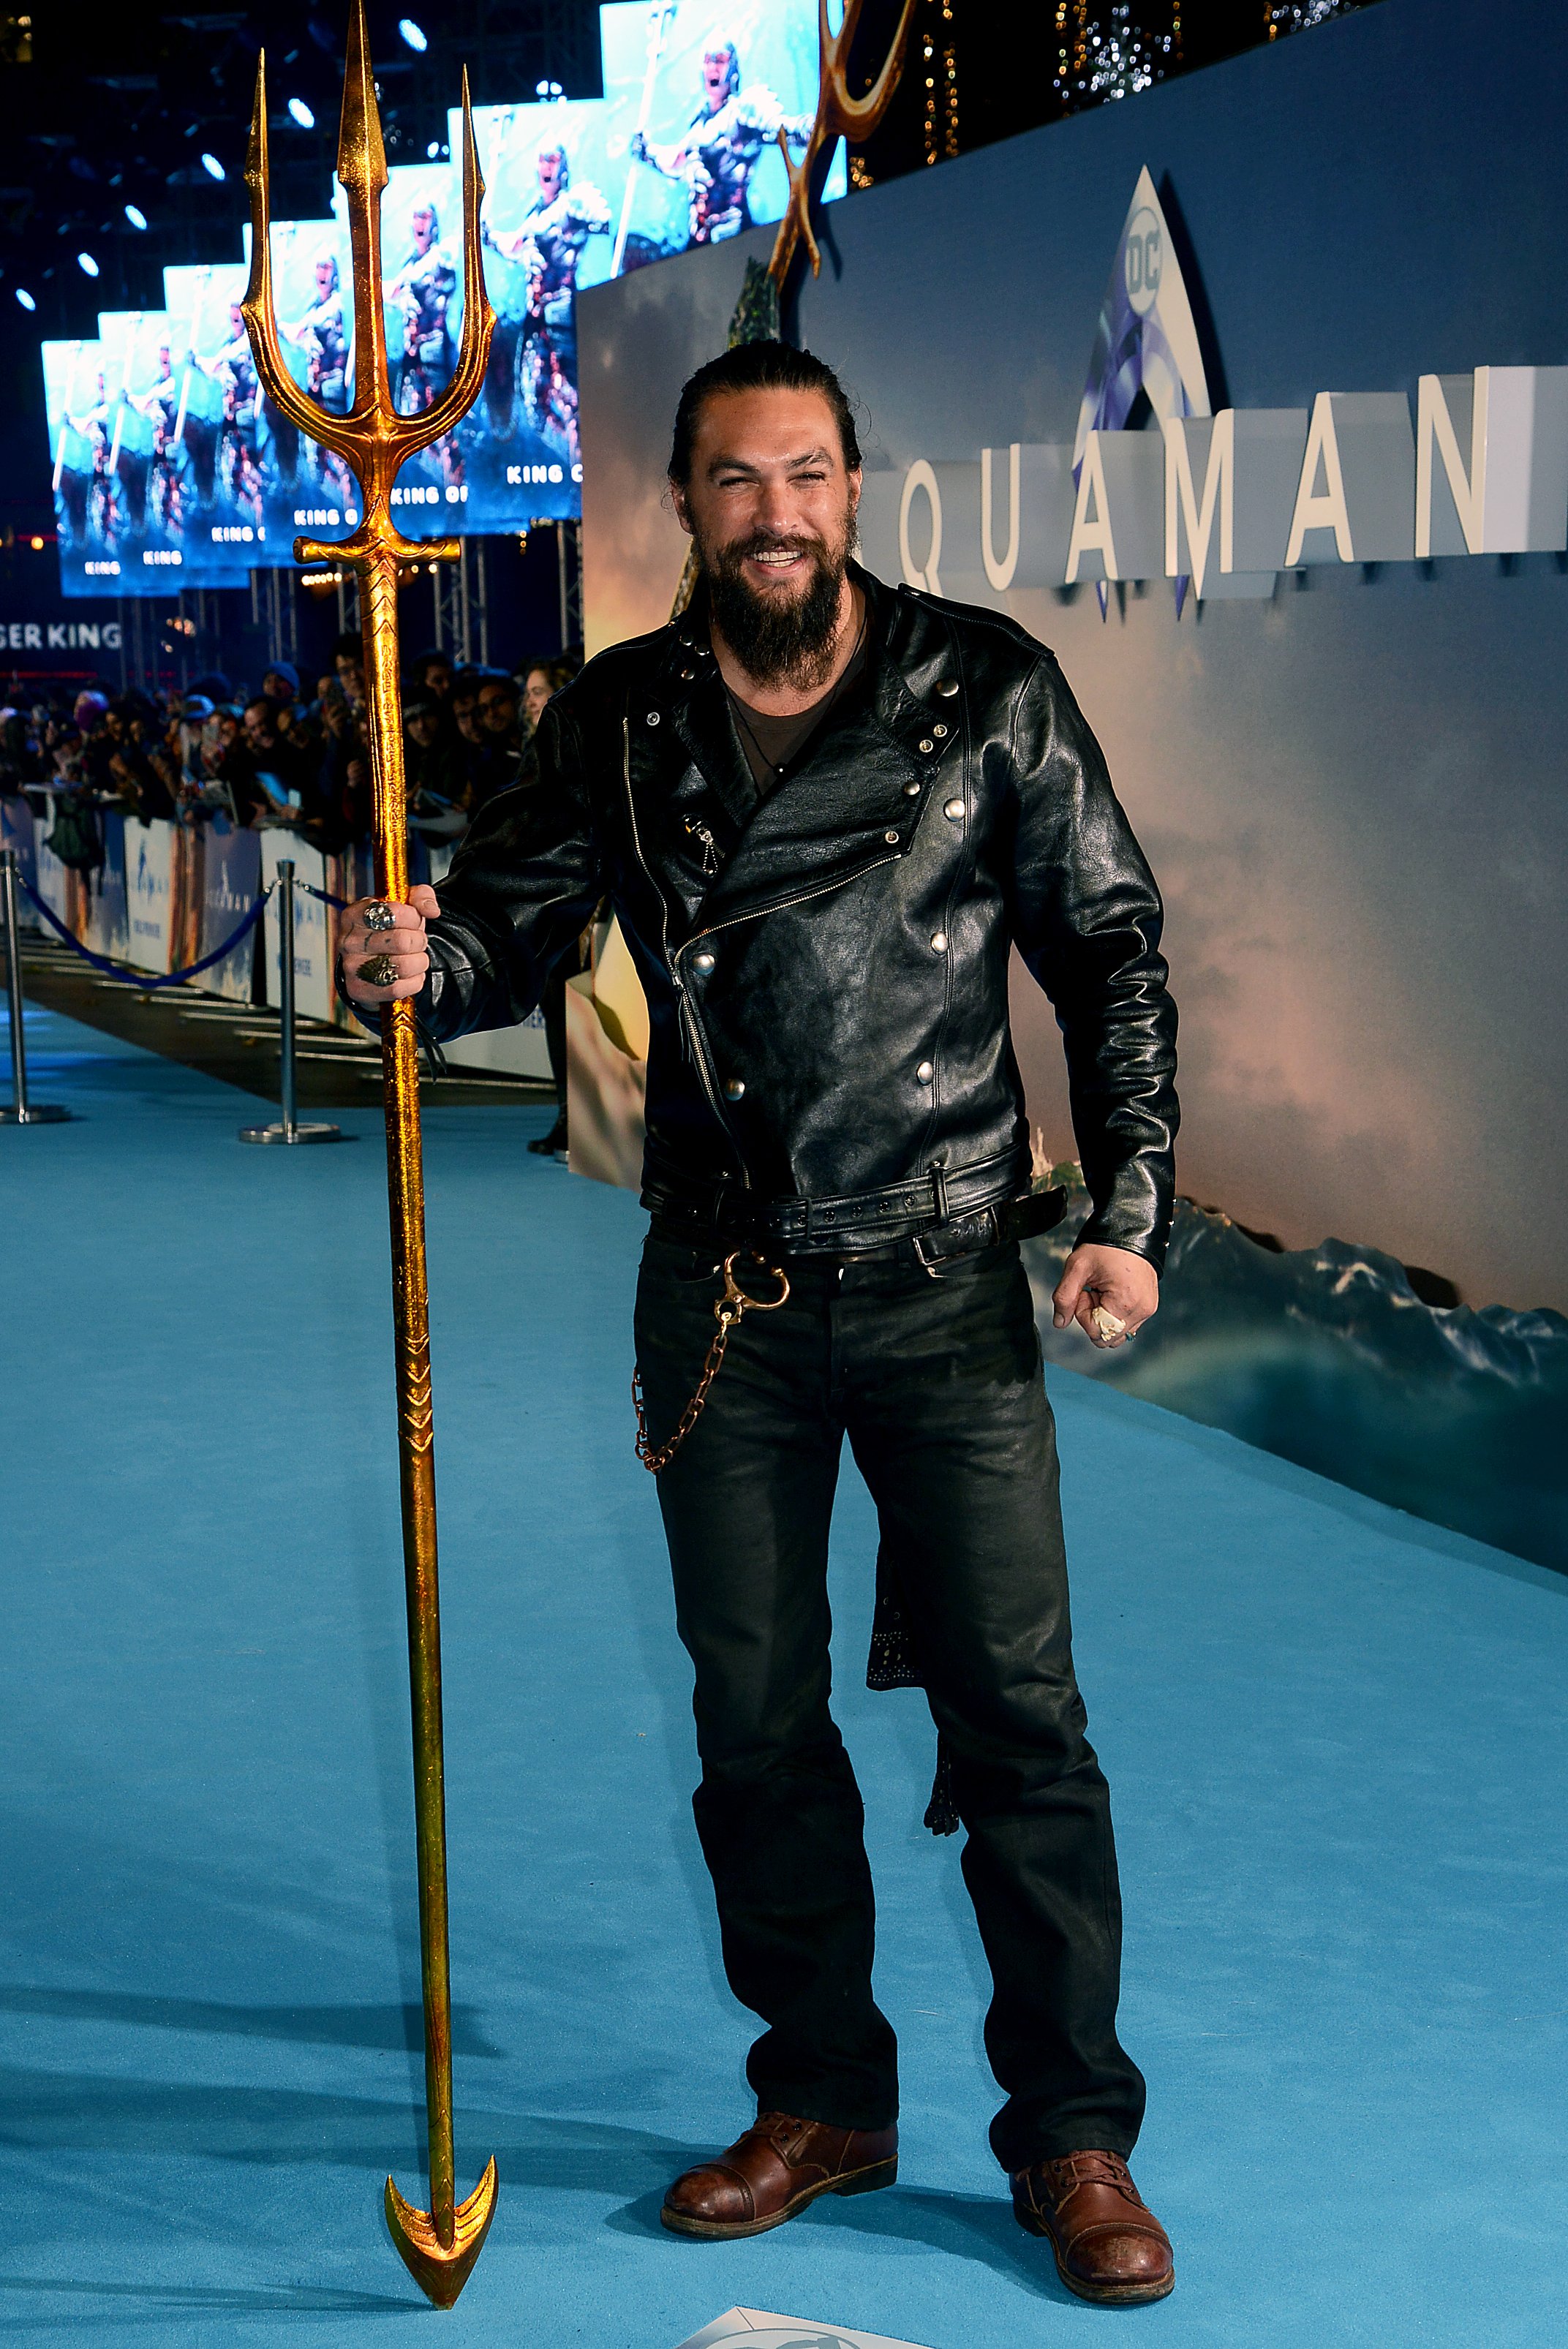 Jason Momoa bei der Weltpremiere von "Aquaman" im Cineworld Leicester Square am 26. November 2018 in London, England | Quelle: Getty Images